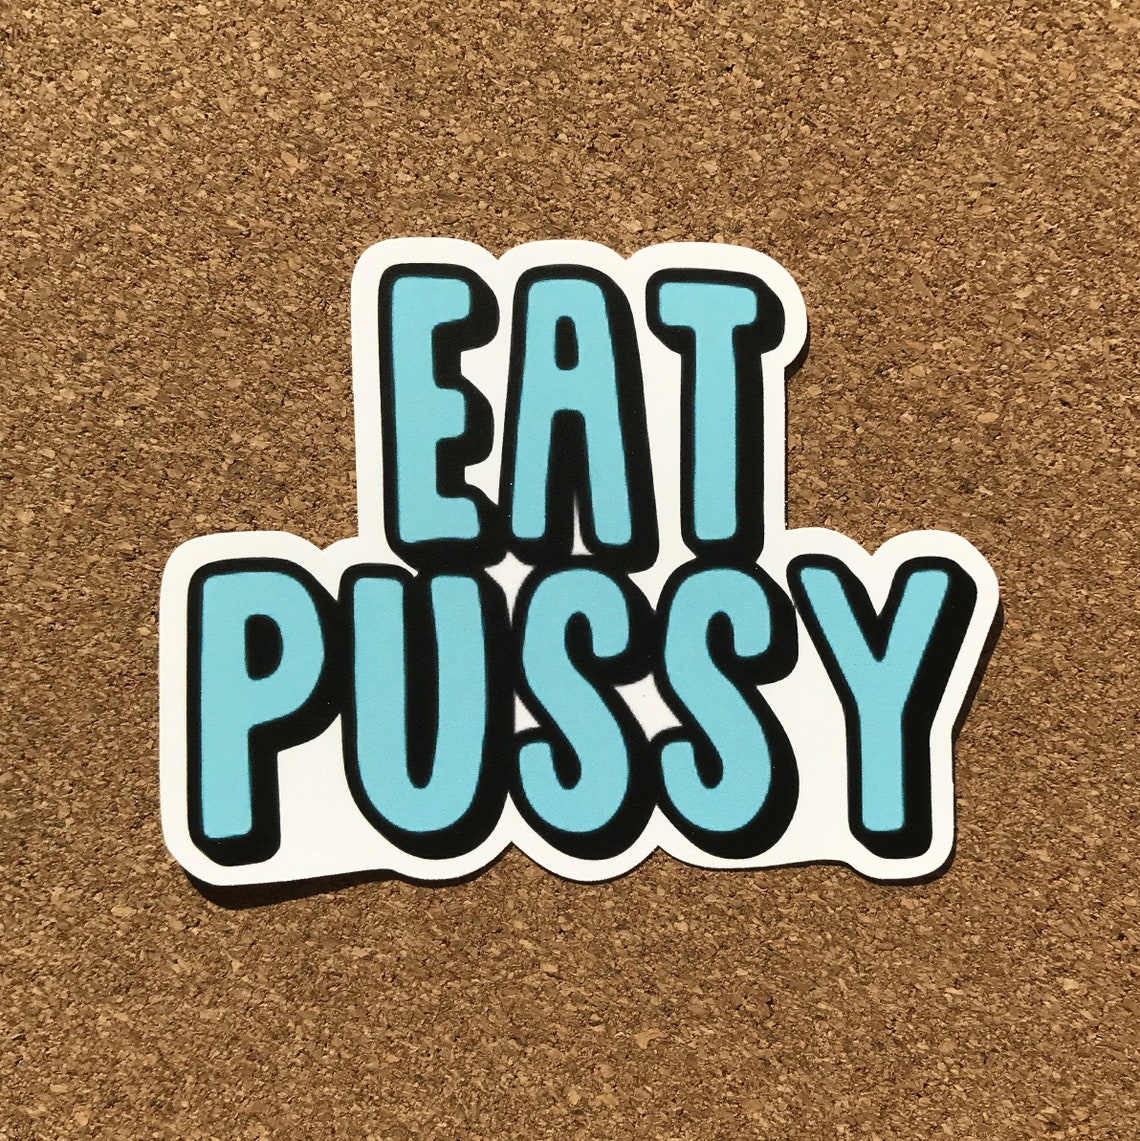 Eat Pussy Sticker Eco Friendly Birthday T Weatherproof Etsy Uk